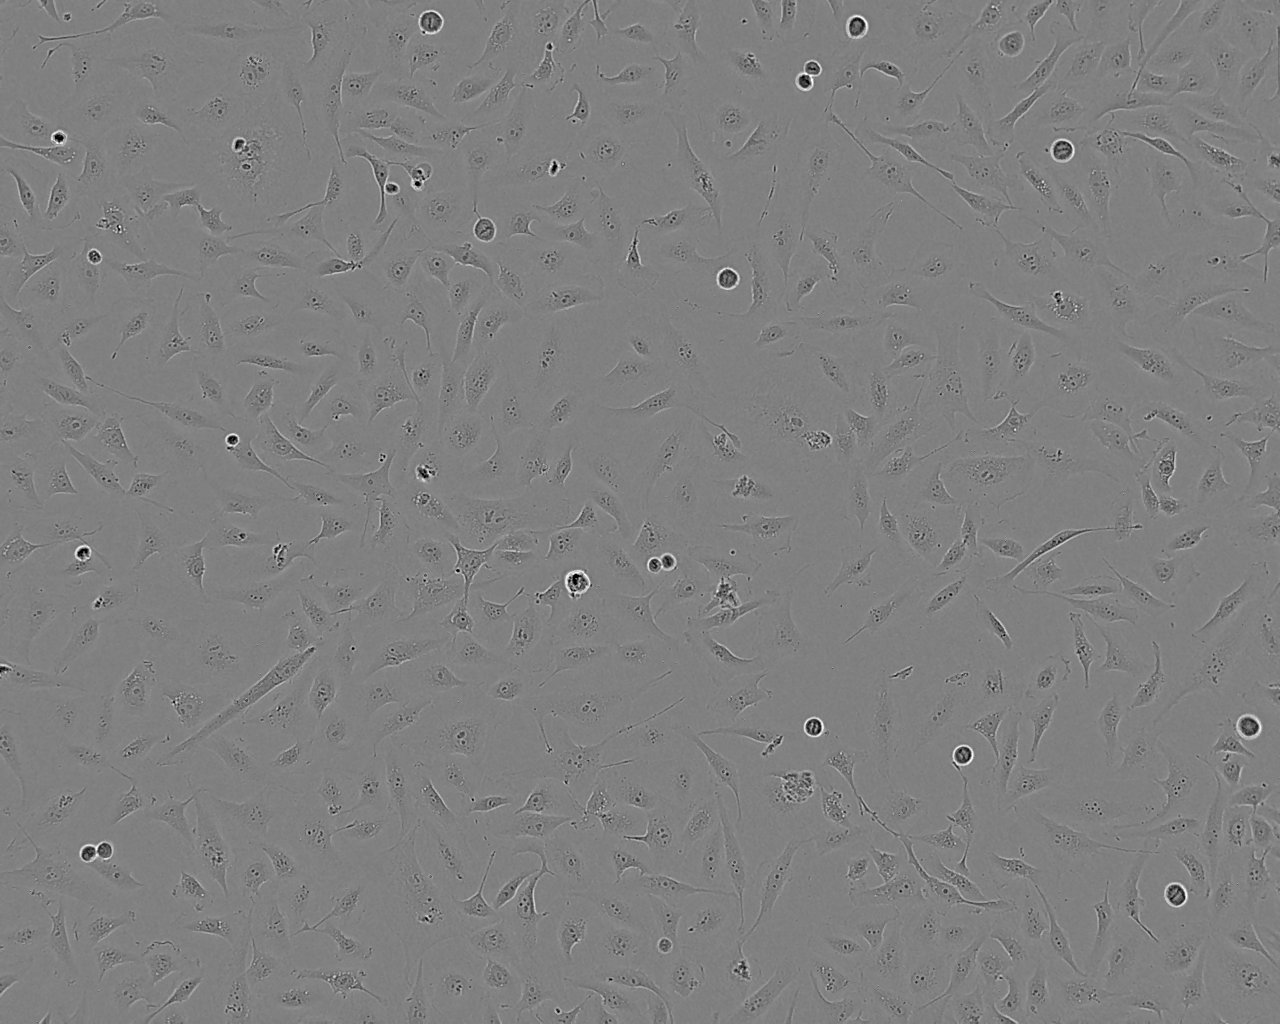 SNU-719 epithelioid cells人胃癌细胞系